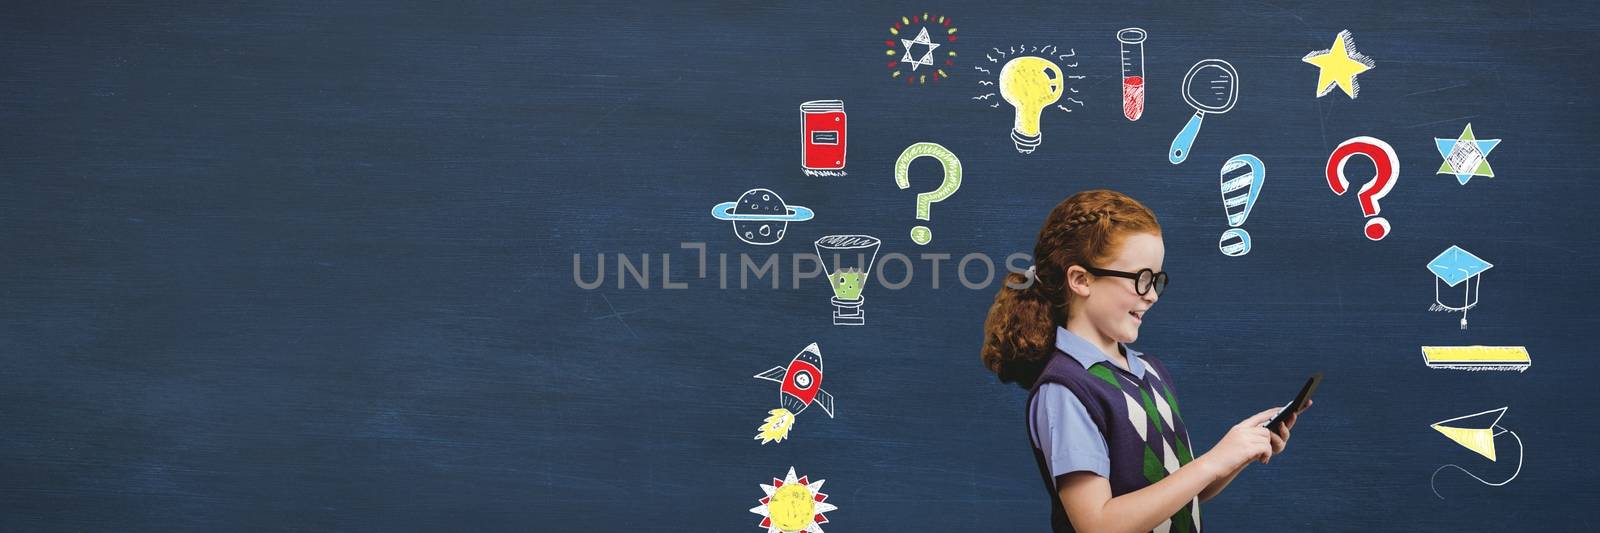 School boy and School girl holding phone and Education drawing on blackboard for school by Wavebreakmedia